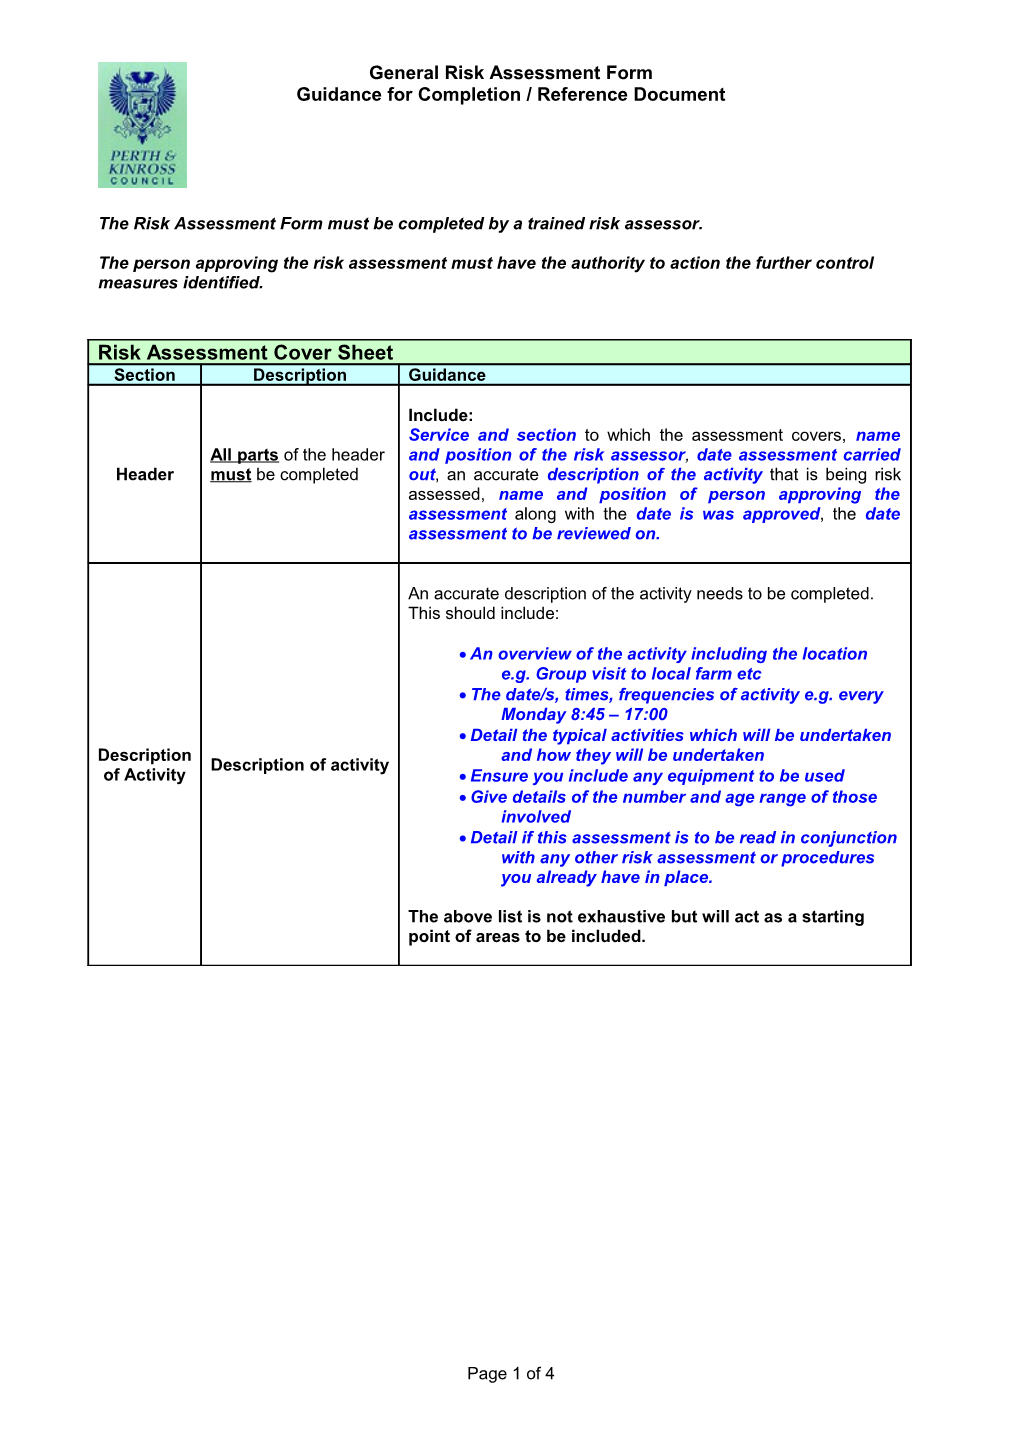 General Risk Assessment Form Guidance for Completion